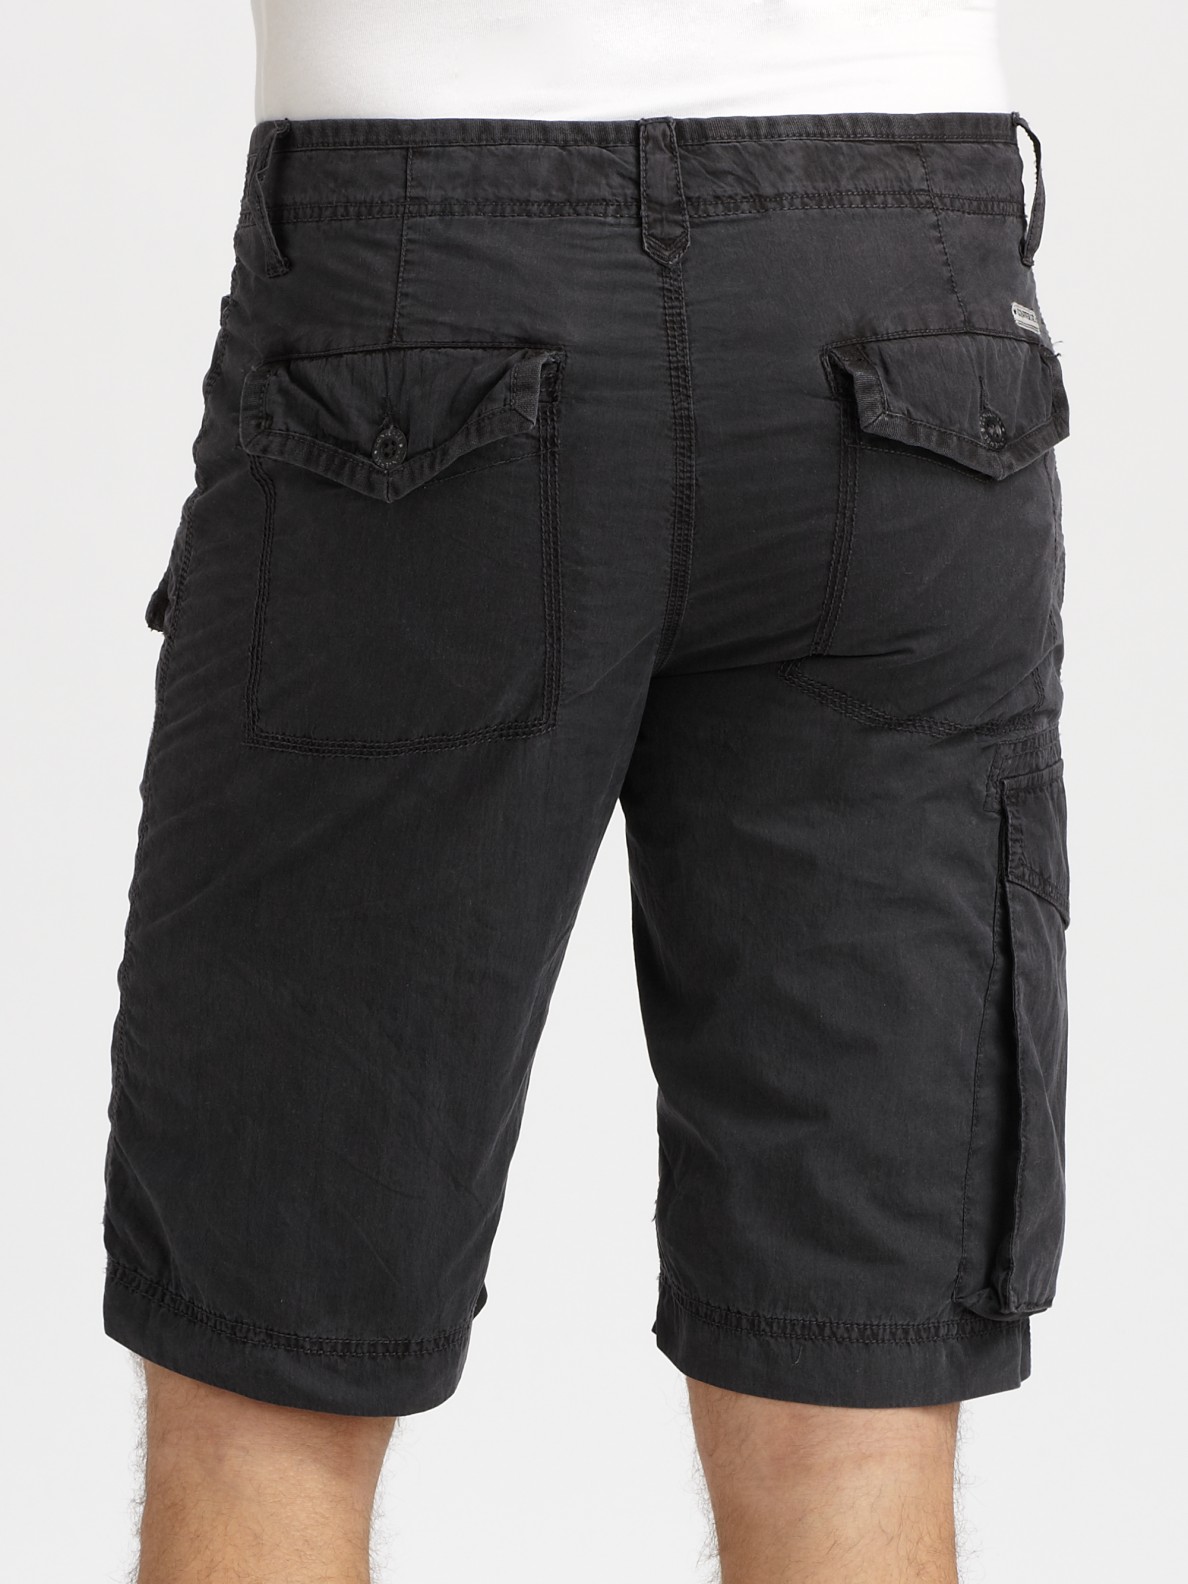 Converse Emmett Cargo Shorts in Grey (Gray) for Men - Lyst